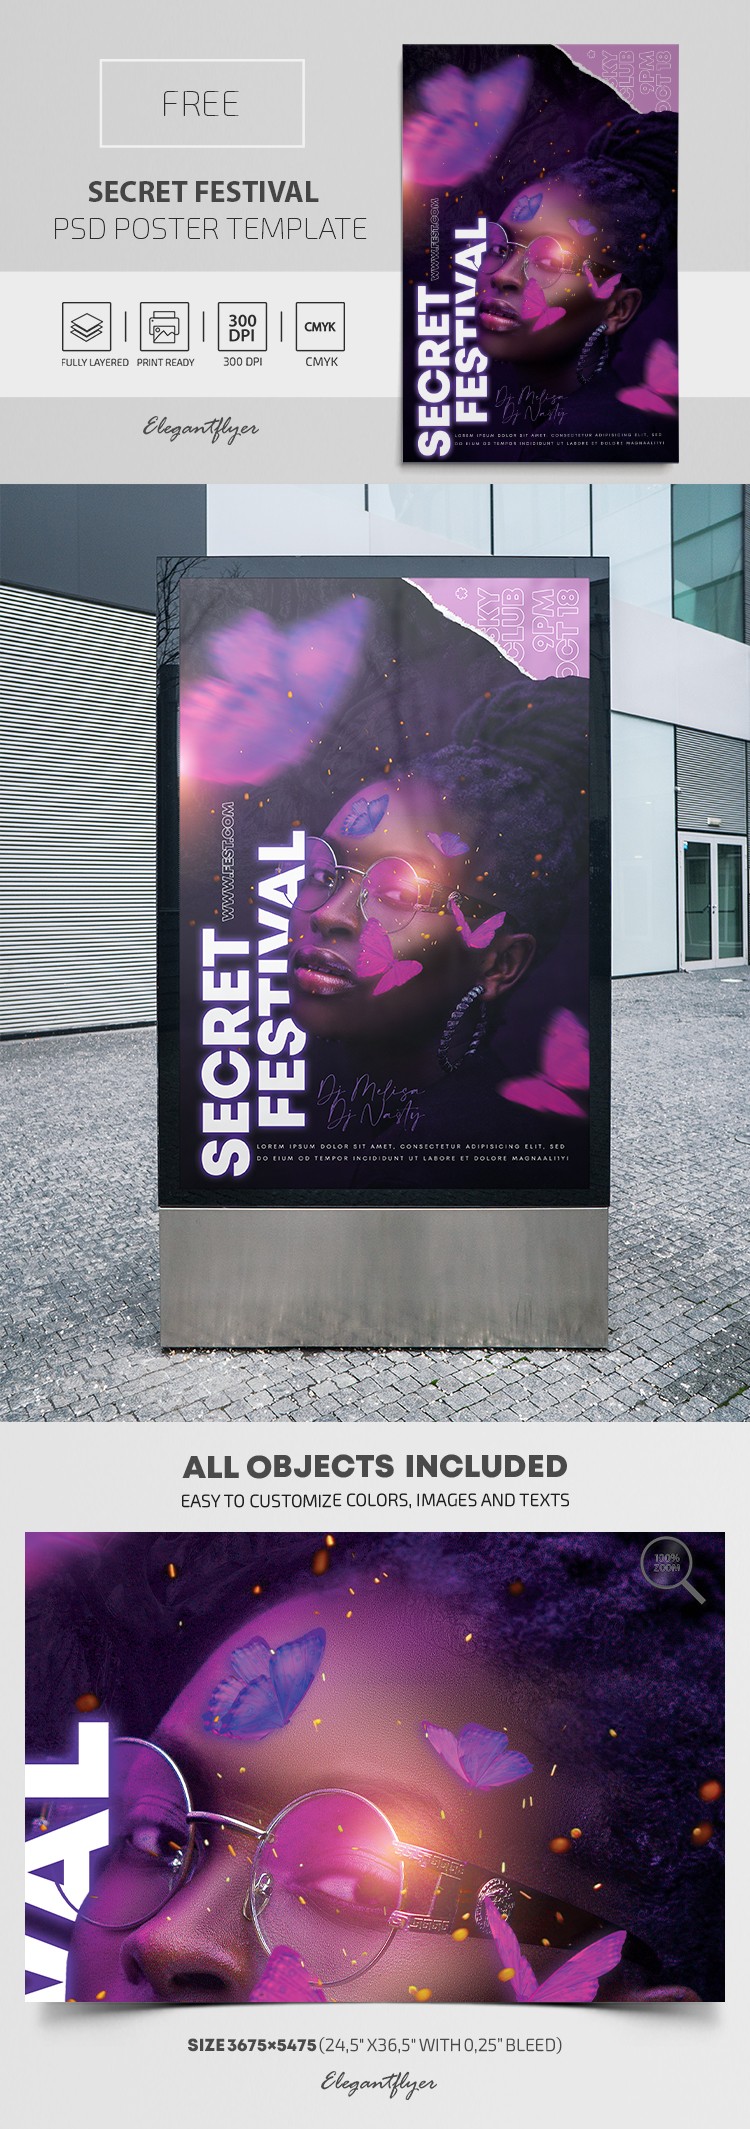 Poster Segreto del Festival by ElegantFlyer